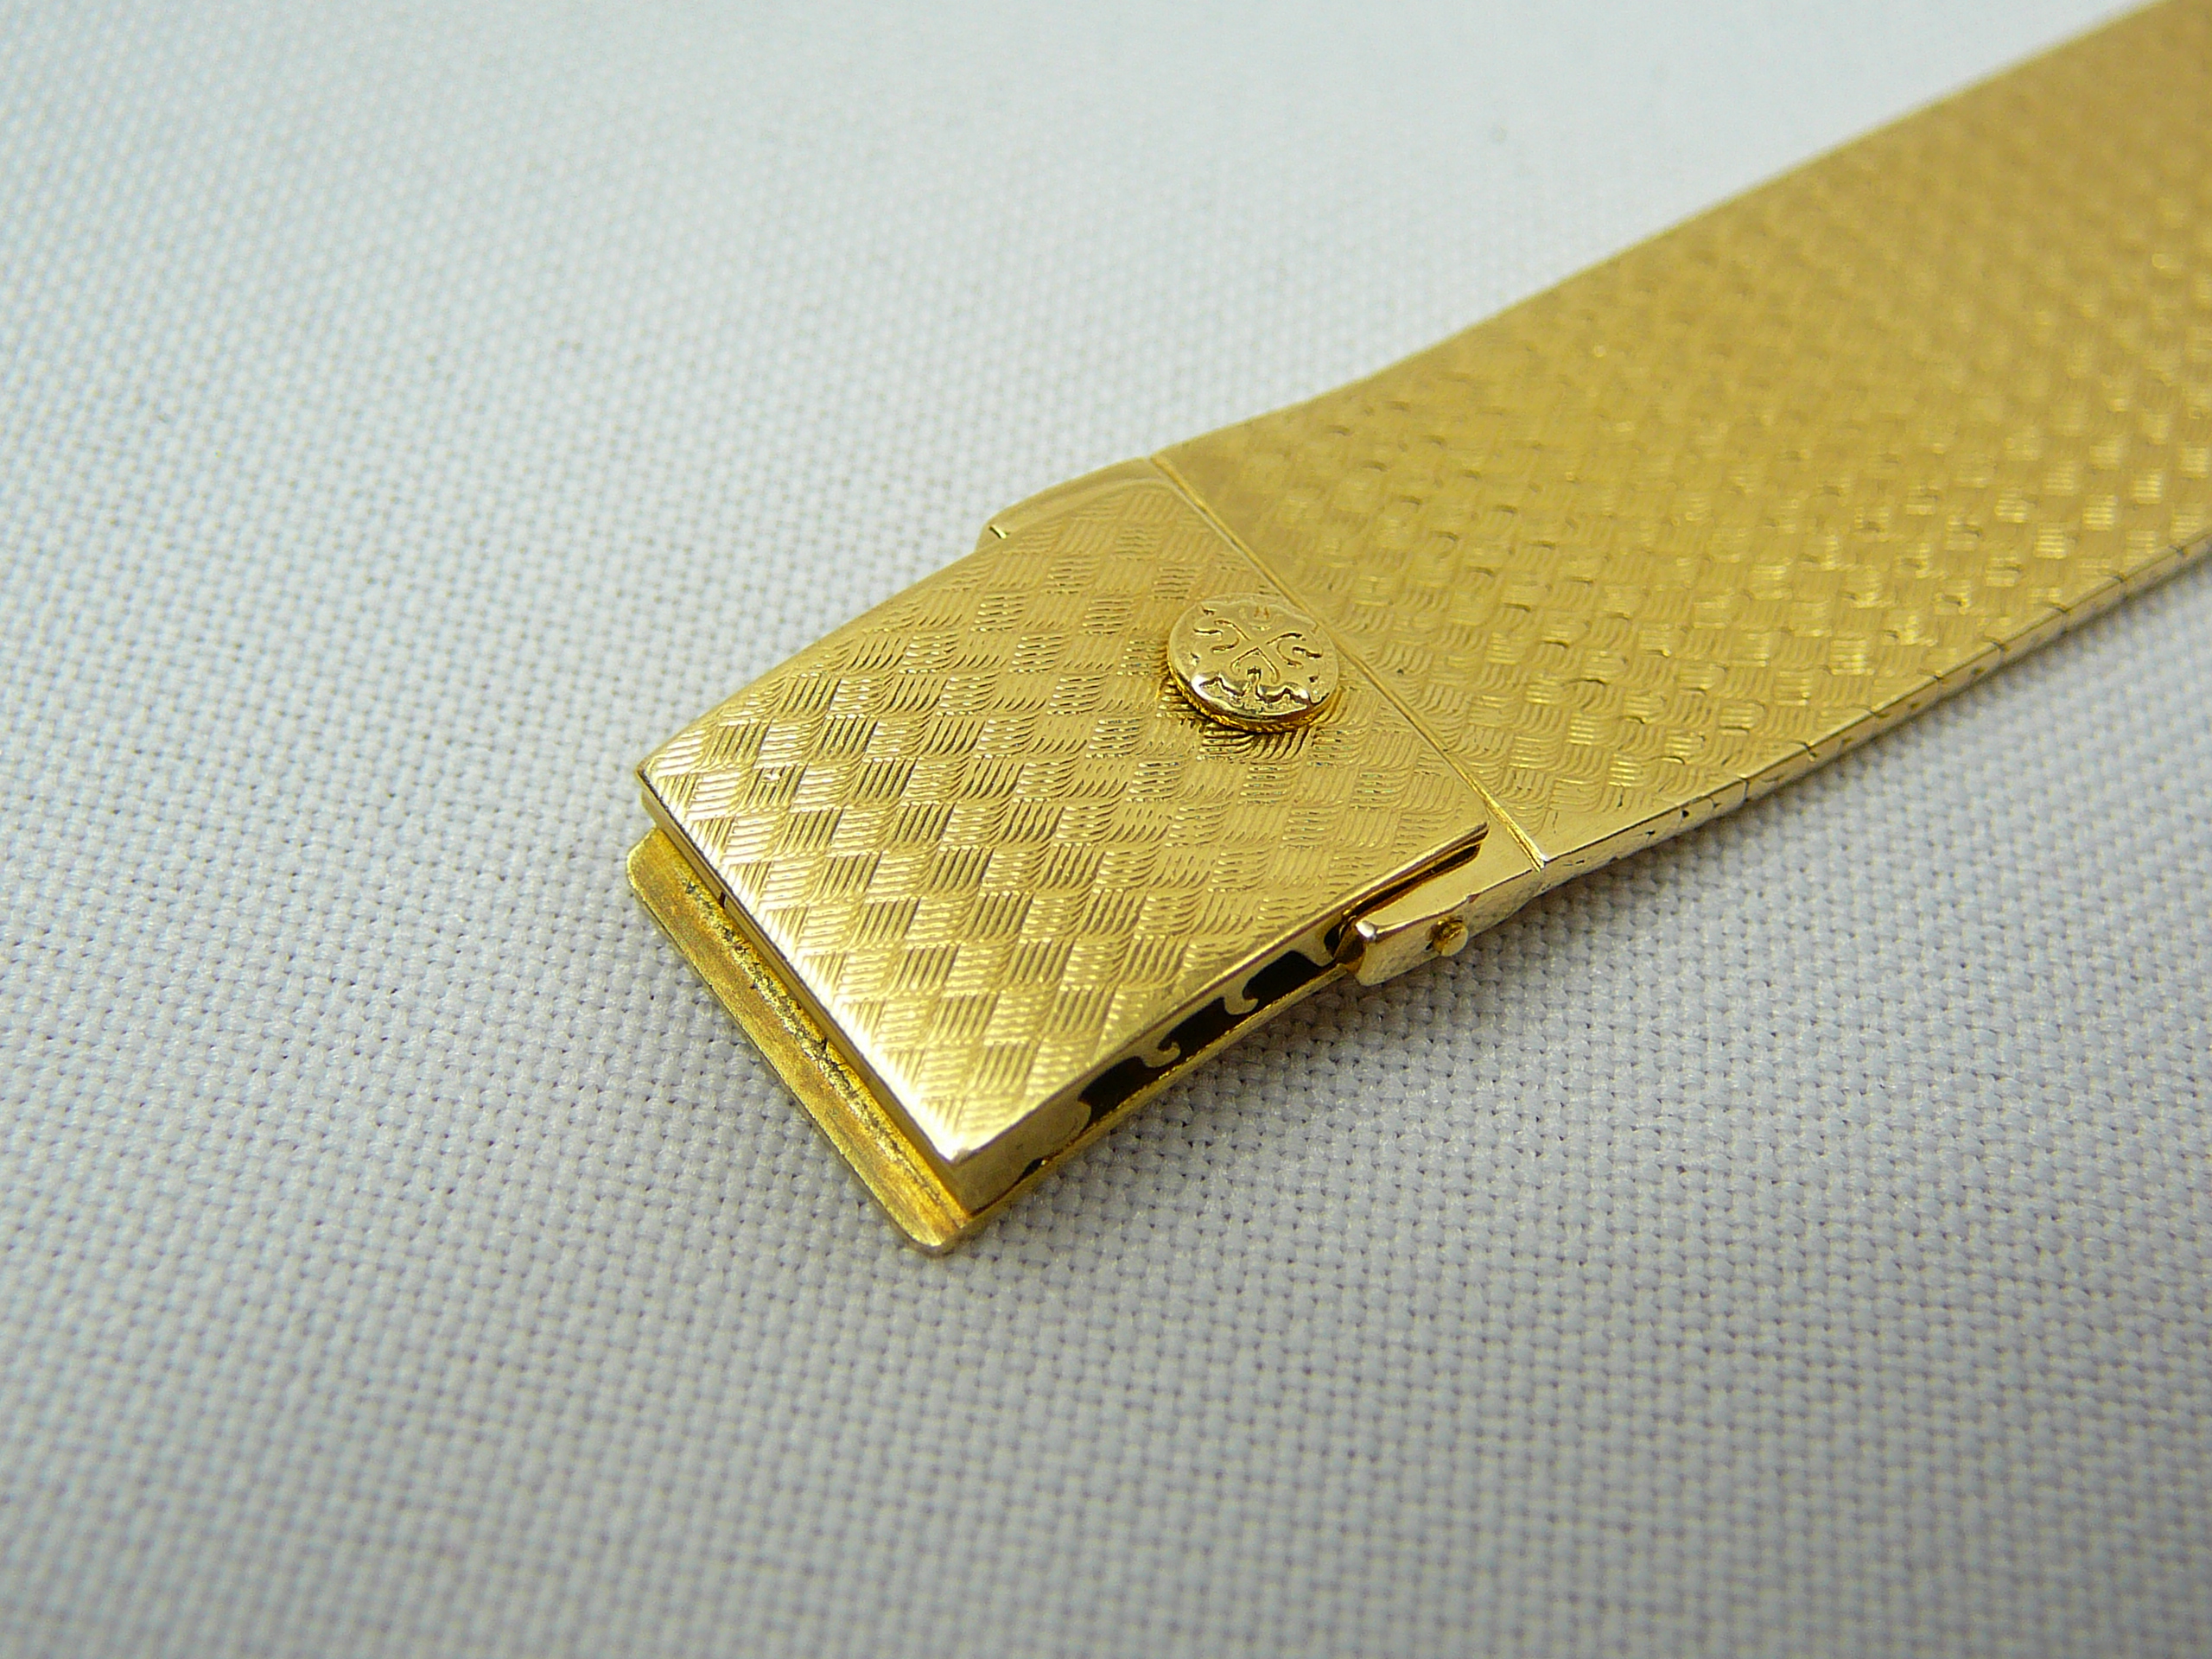 Gents Patek Philippe 18ct gold wrist watch - Image 4 of 7